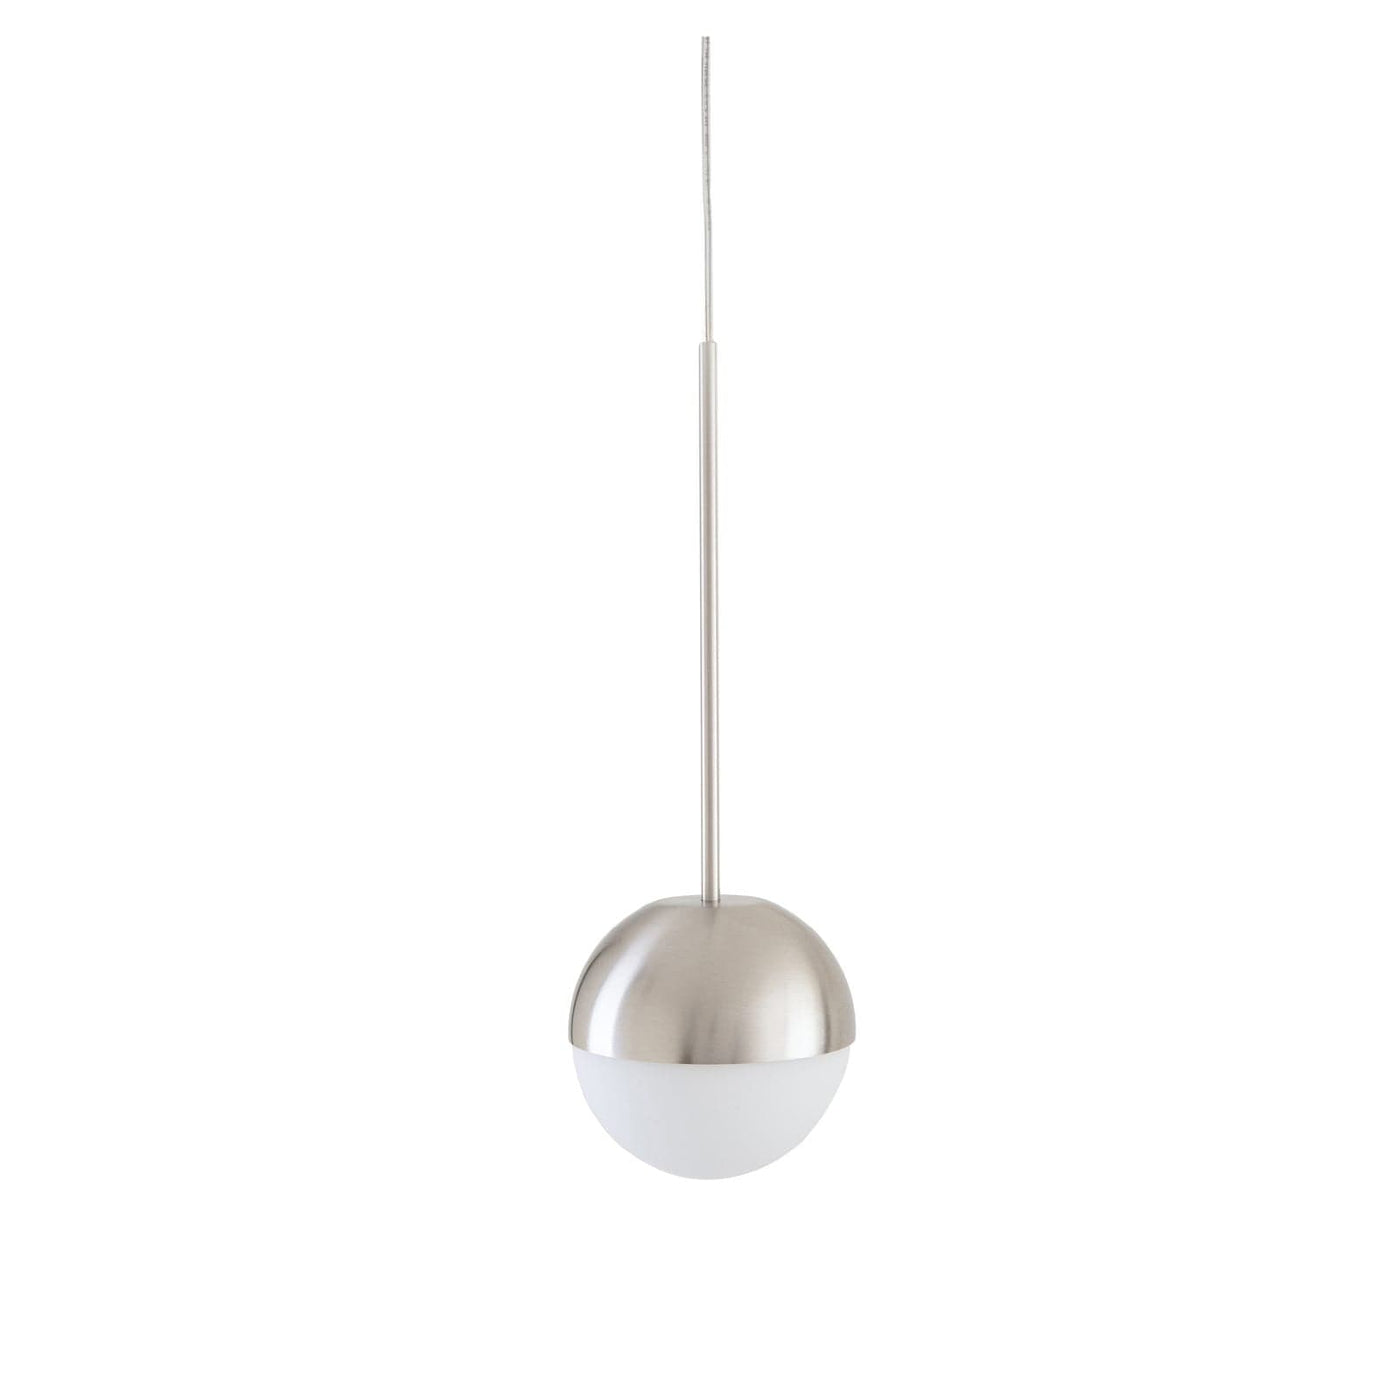 Suspension Lamp PALLINA by FontanaArte Design Lab for FontanaArte 04